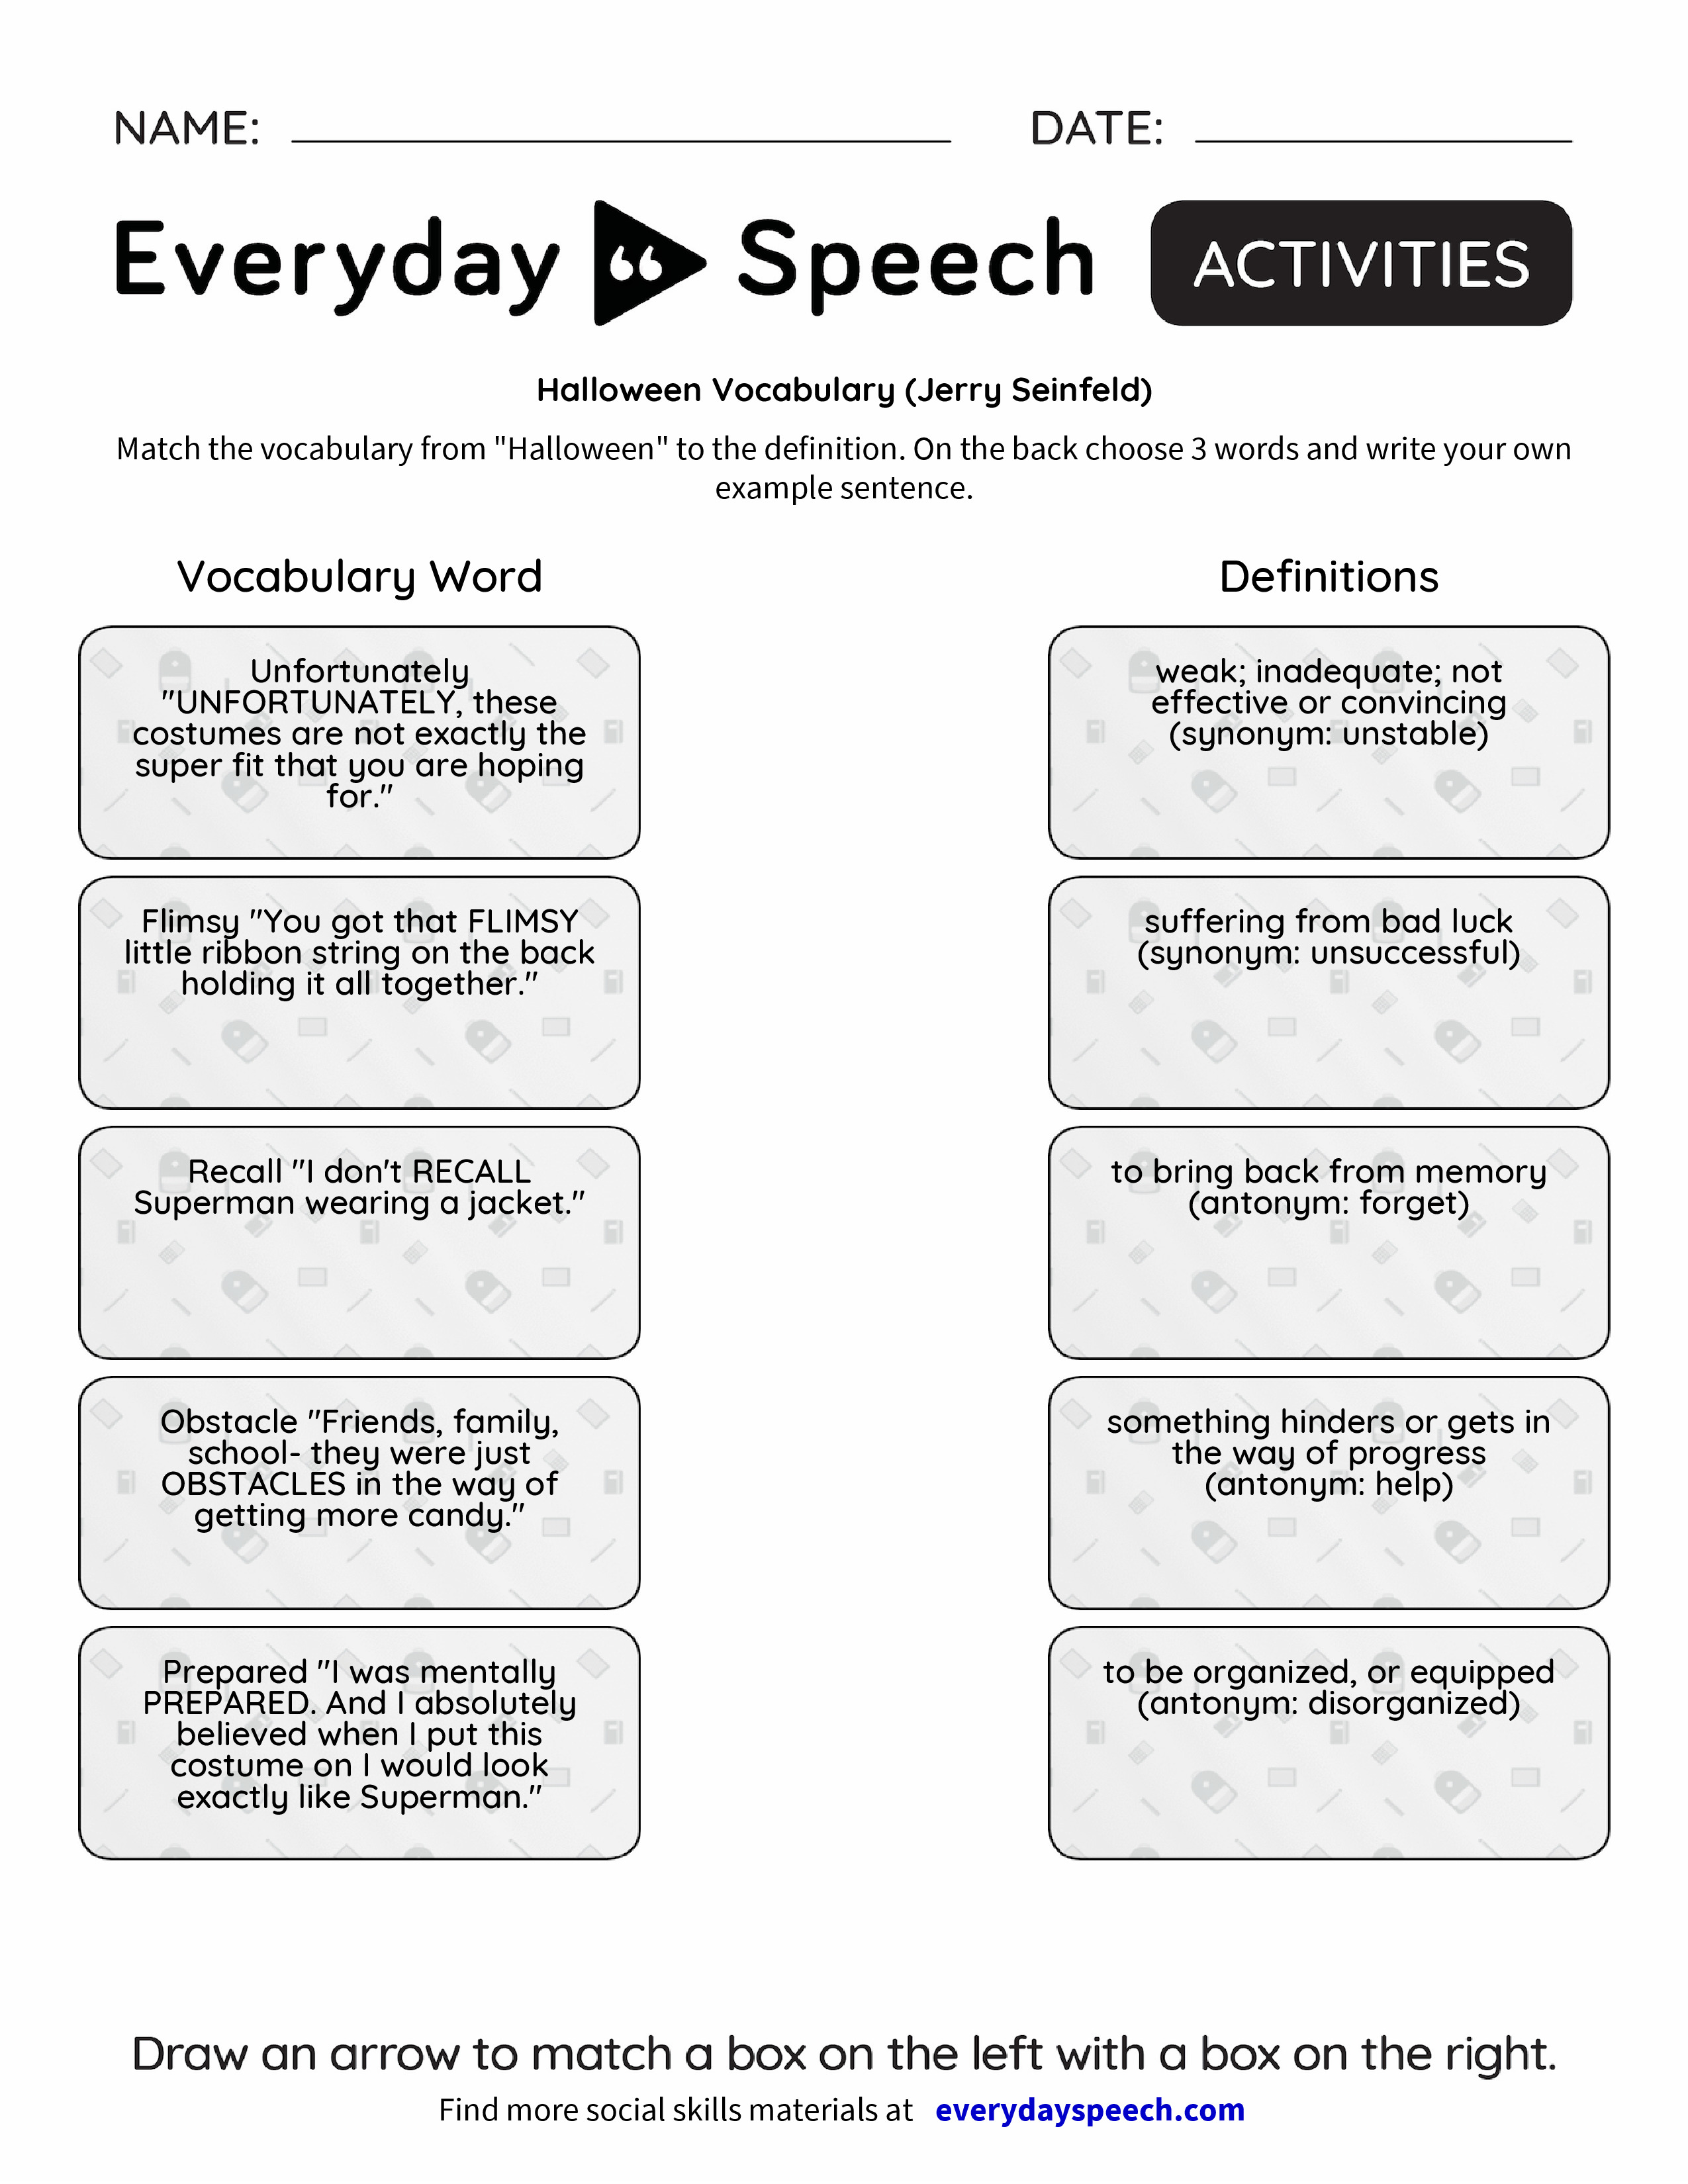 halloween vocabulary (jerry seinfeld) - everyday speech - everyday